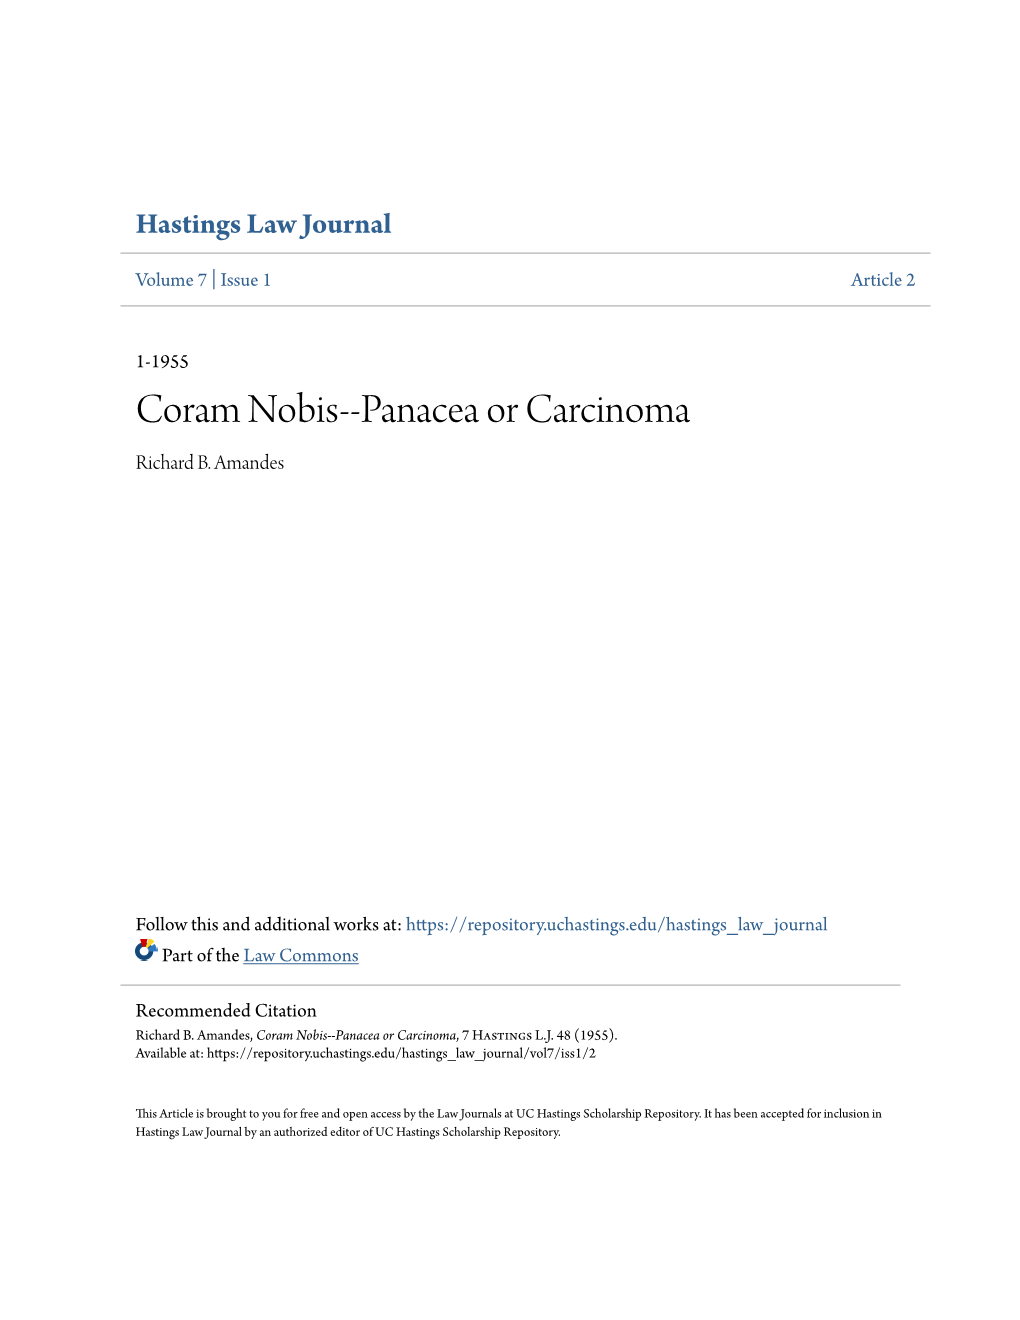 Coram Nobis--Panacea Or Carcinoma Richard B